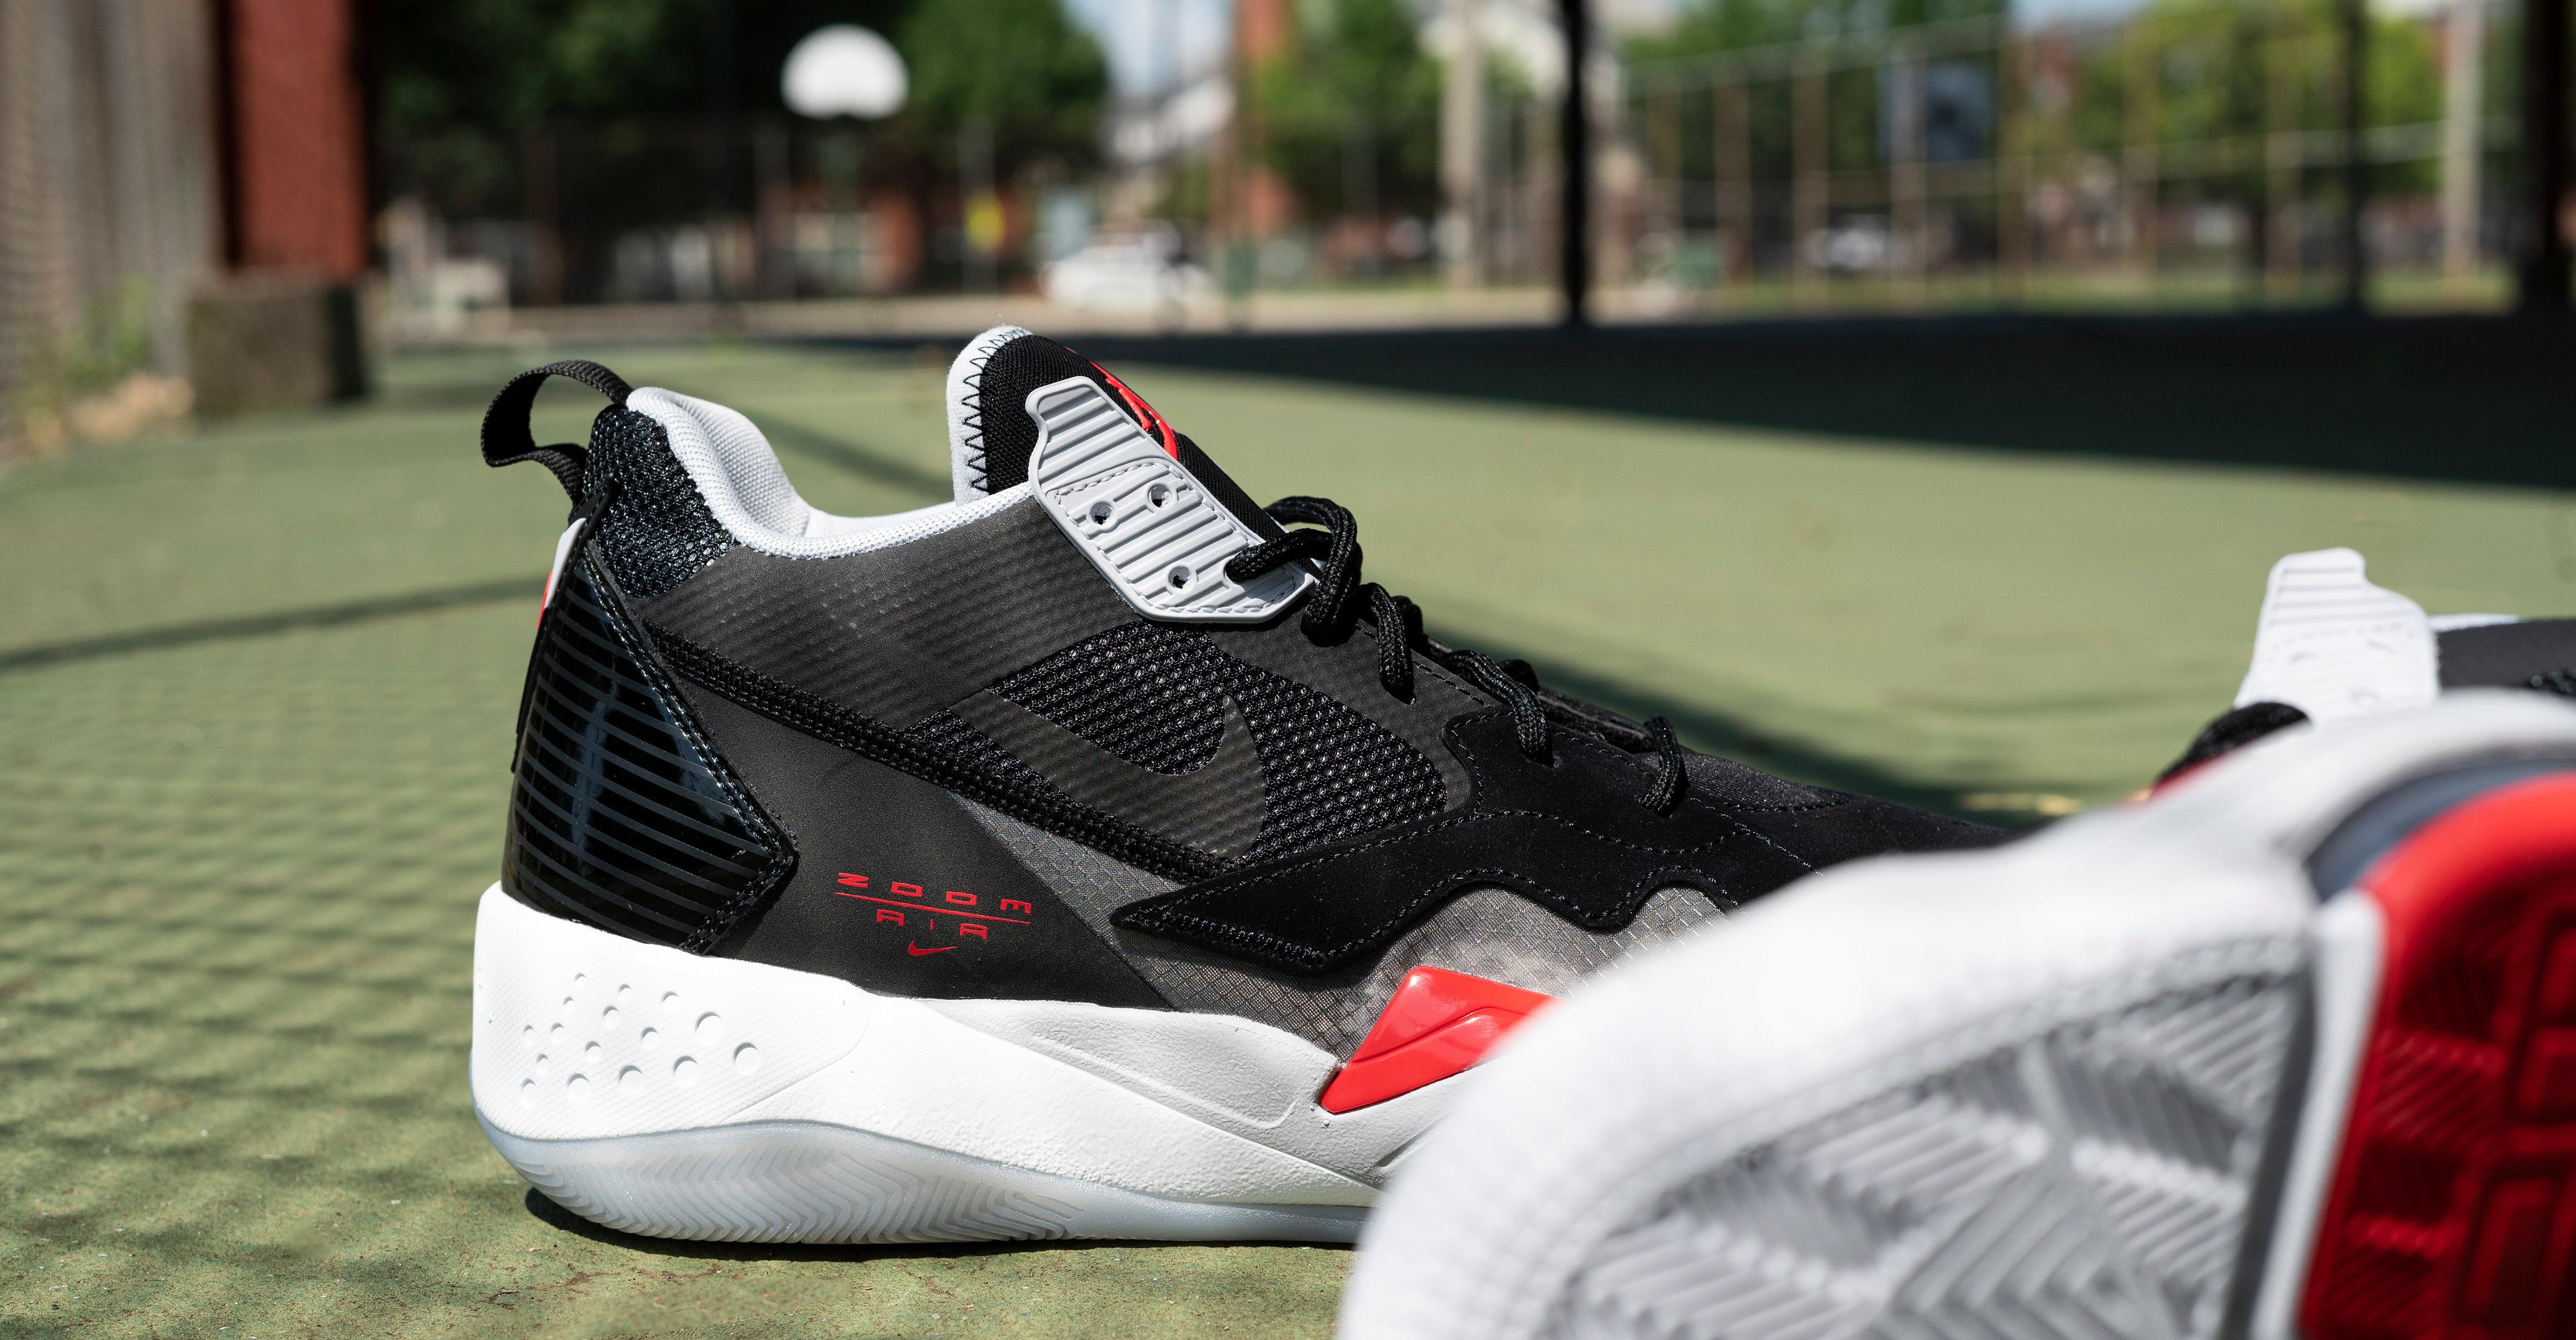 Sneakers Release – Air Jordan Zoom ’92 “Olympic” Black/Red Men’s Shoe